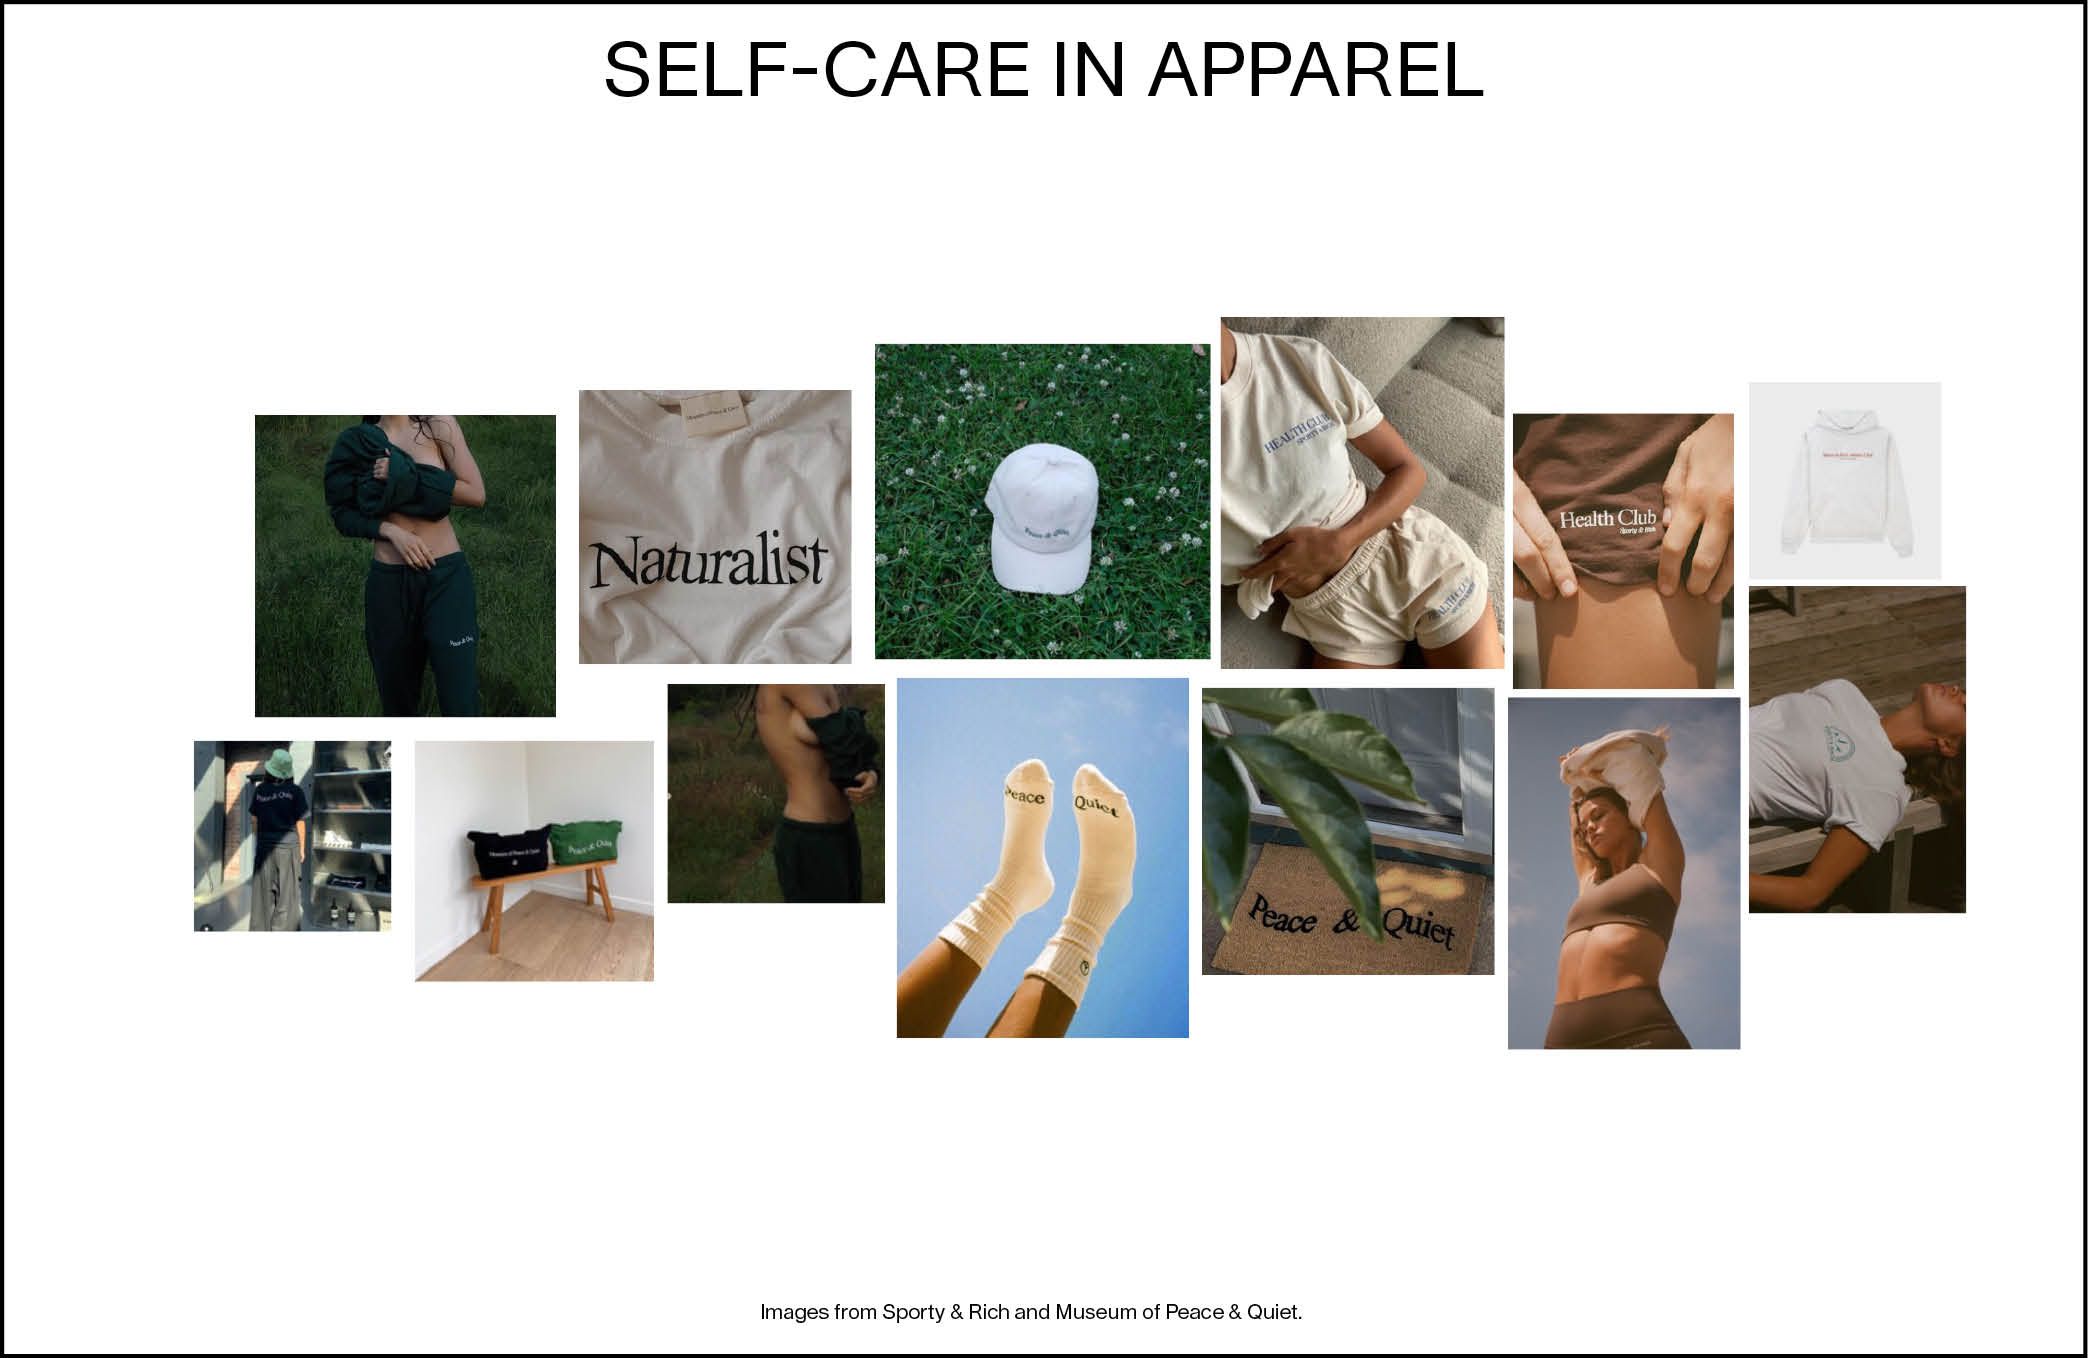 Self-care in apparel